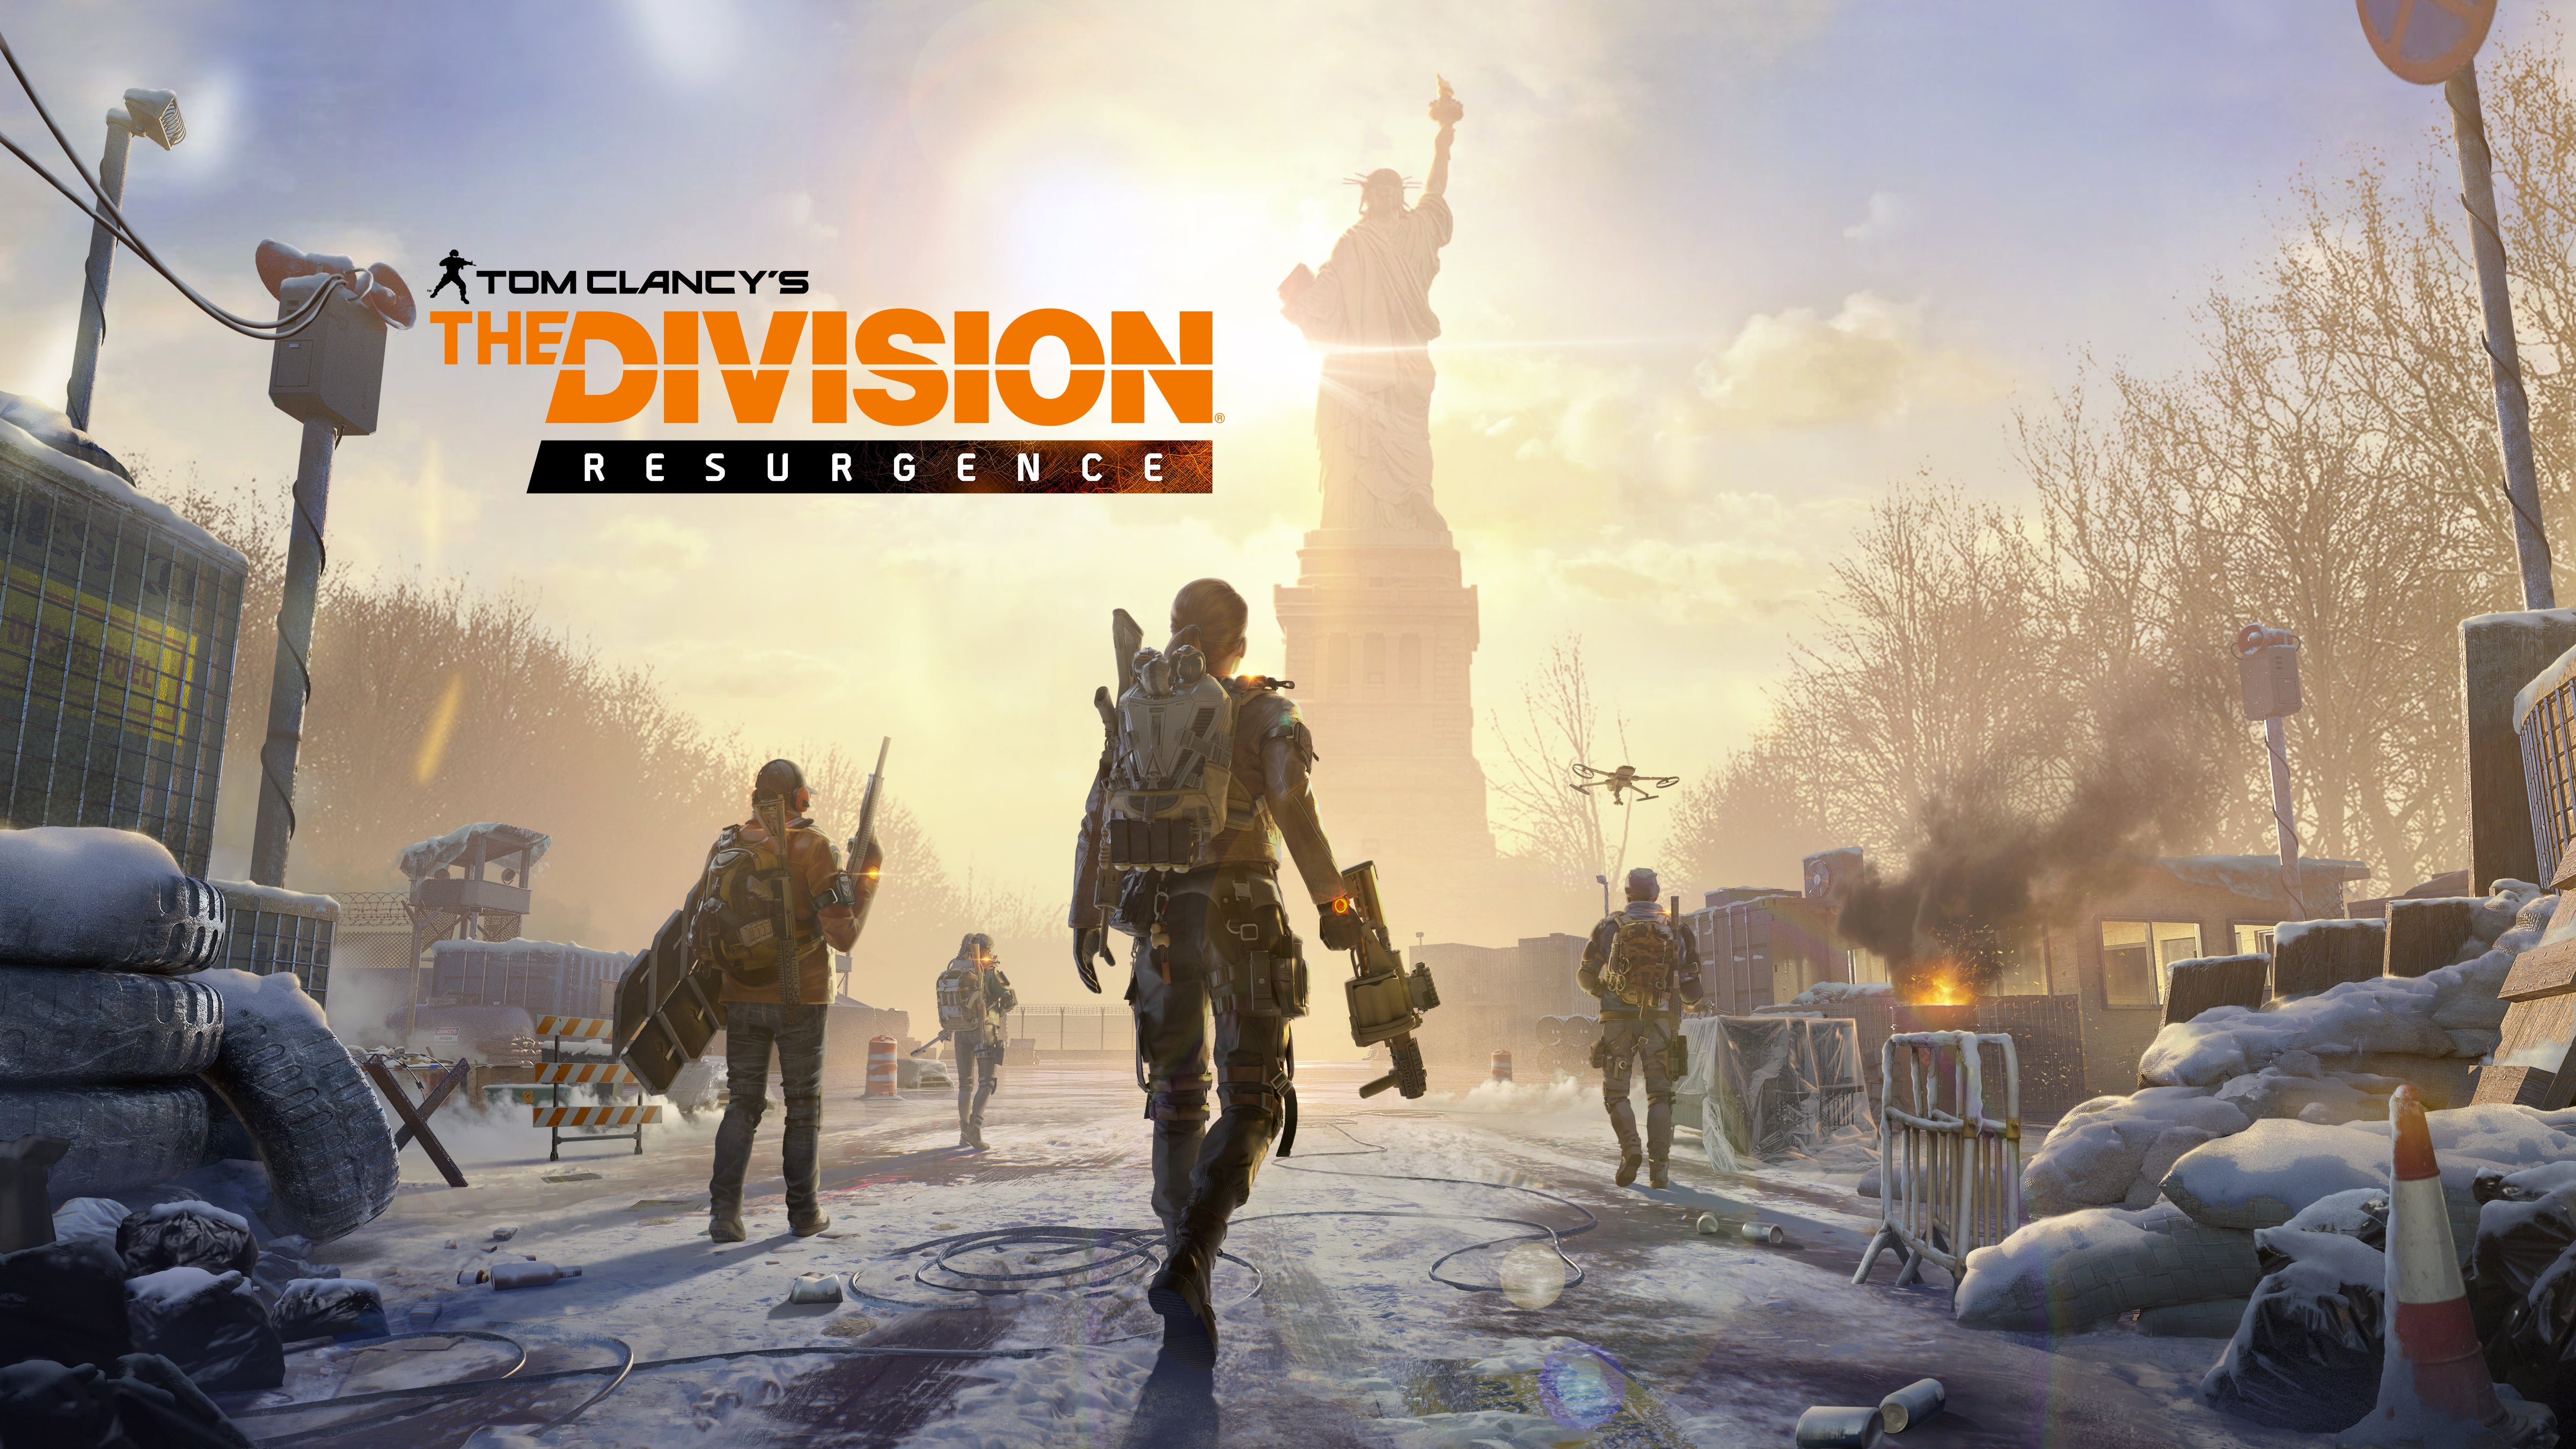 Imagem para The Division Resurgence anunciado para iOS e Android, será free-to-play